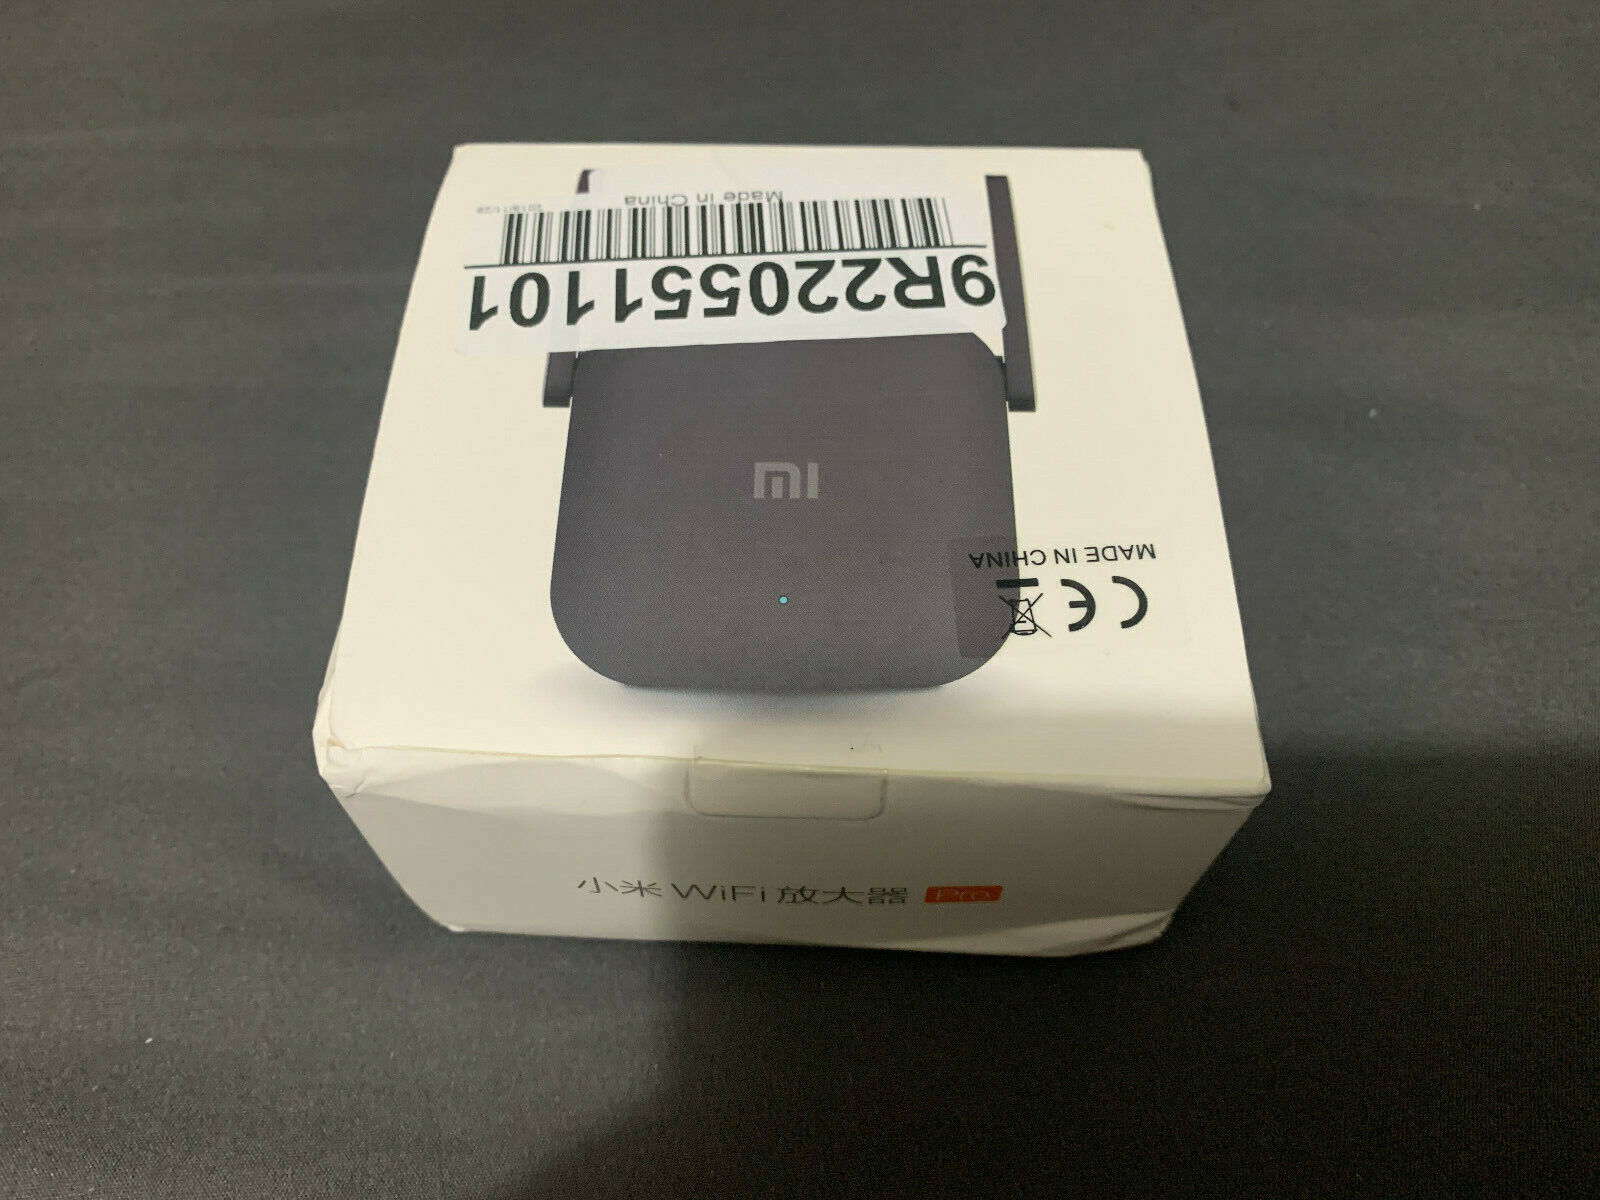 Xiaomi Mi WIFI Repeater Pro 300M WiFi Amplifier Network Extender Signal Boosters